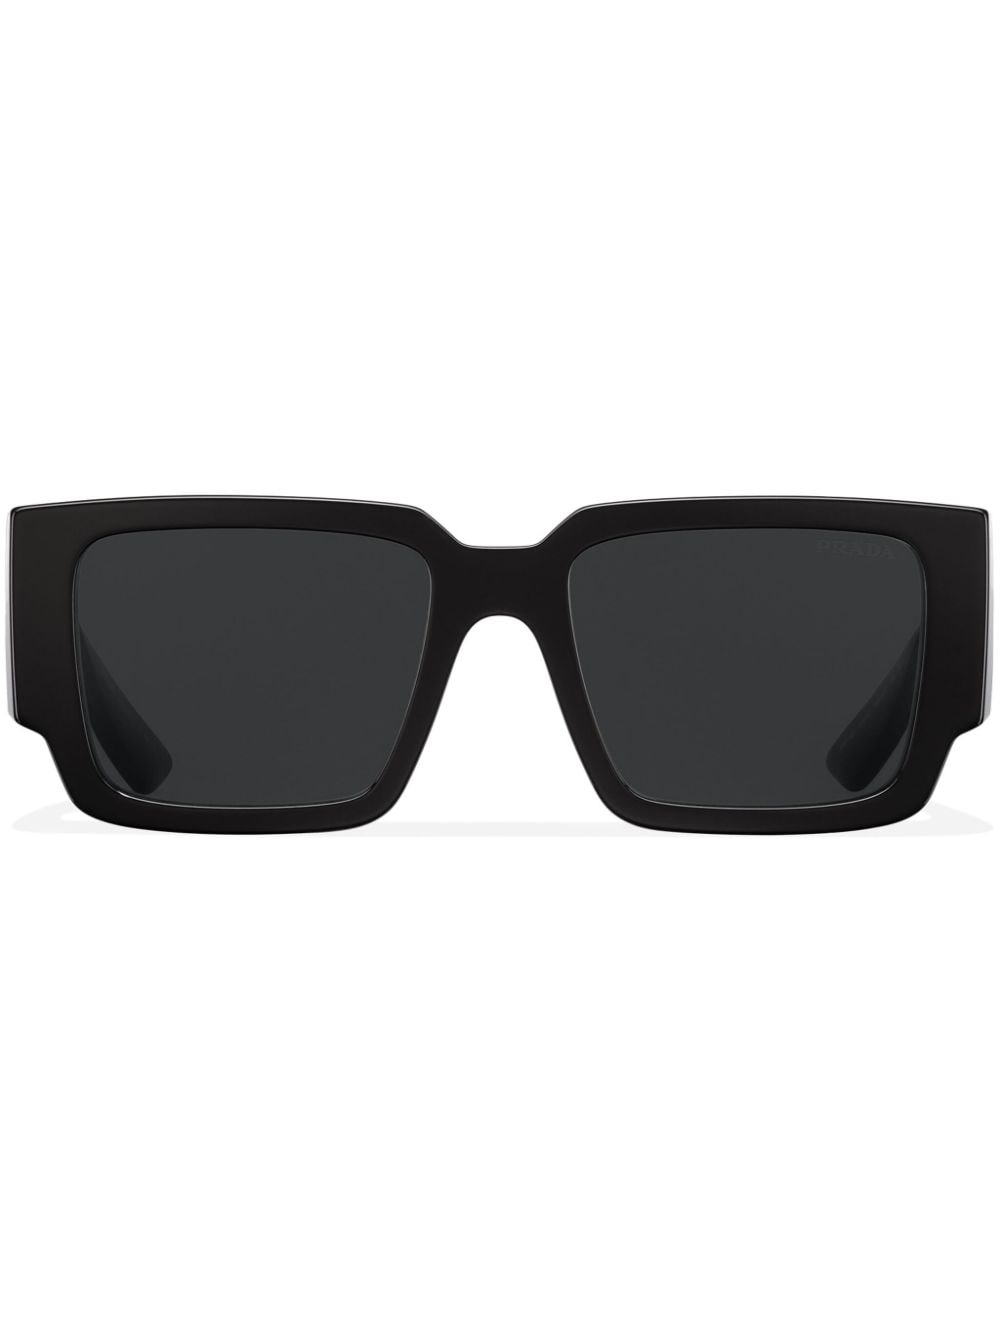 Prada Eyewear Exclusive to Prada sunglasses - Black von Prada Eyewear